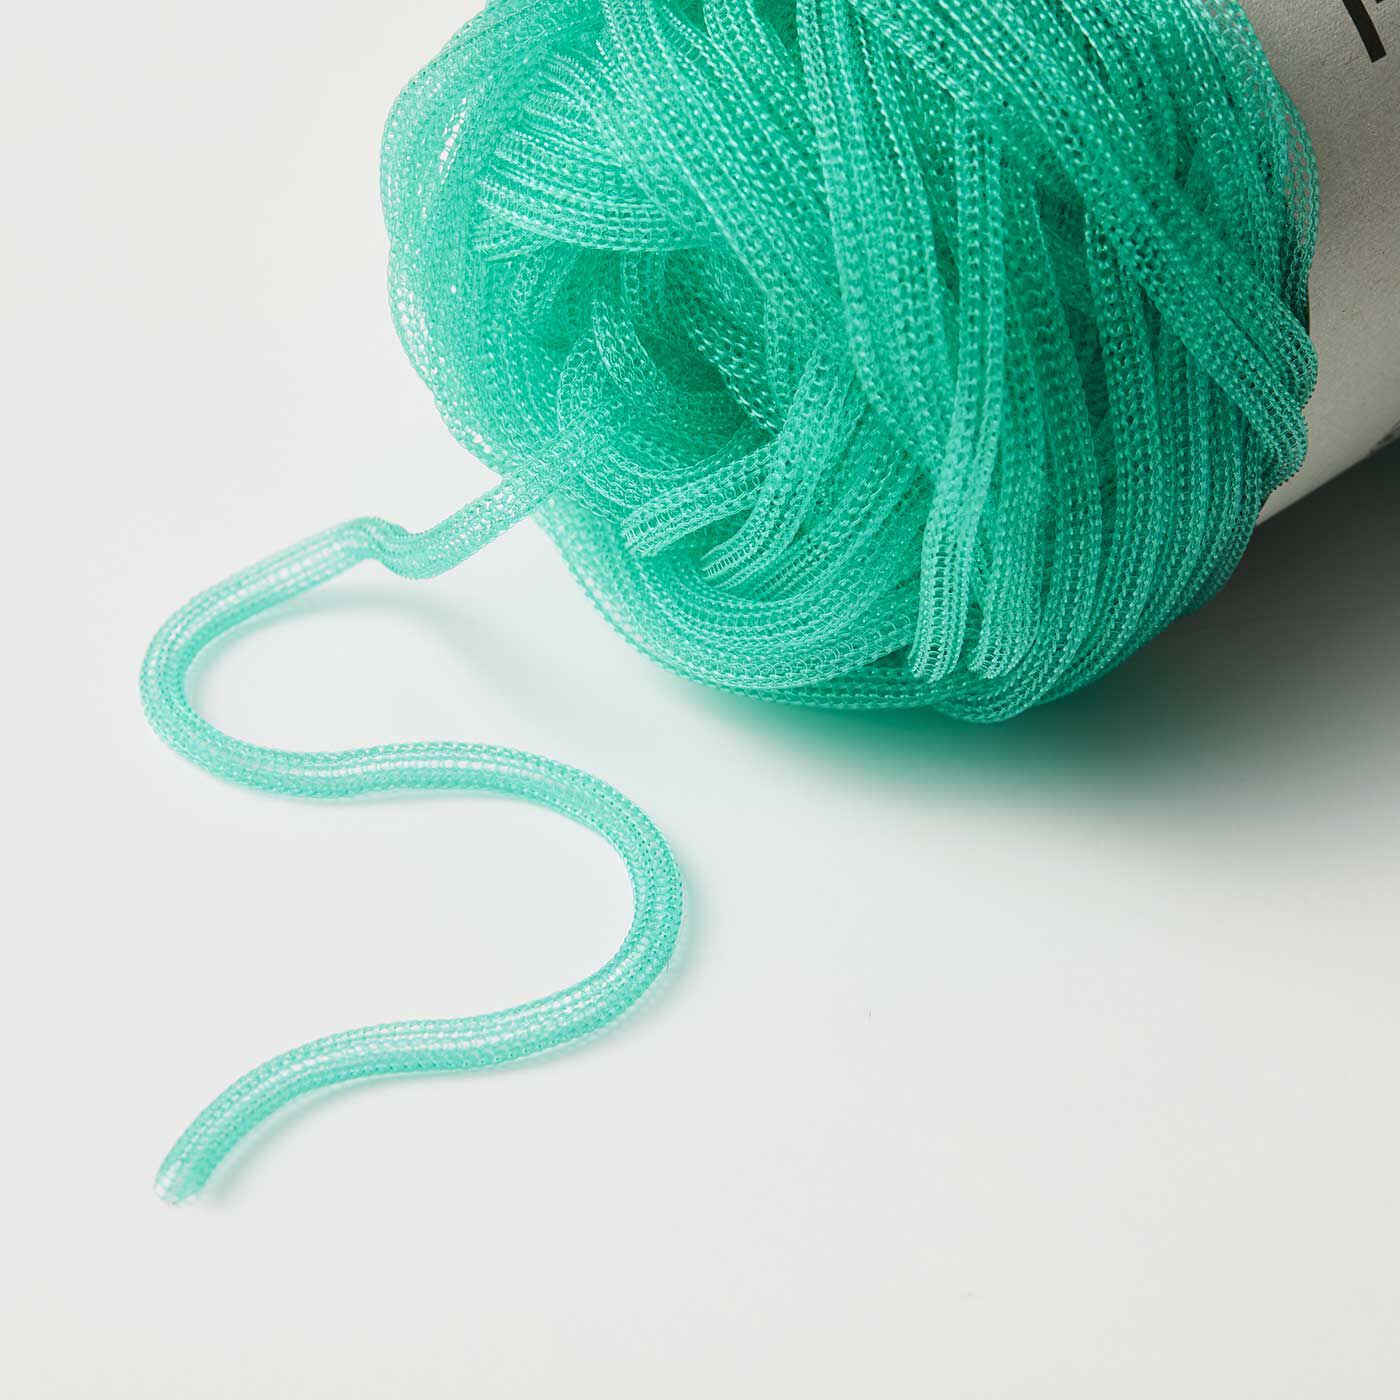 Couturier special|ネオンカラーがまぶしいミニバッグが編める　新触感糸ＴＵＢＥとミニブック「ＰａｔｔｅｒｎｓＮｏｔｅ」|細いナイロン糸を筒状に編み上げた糸。